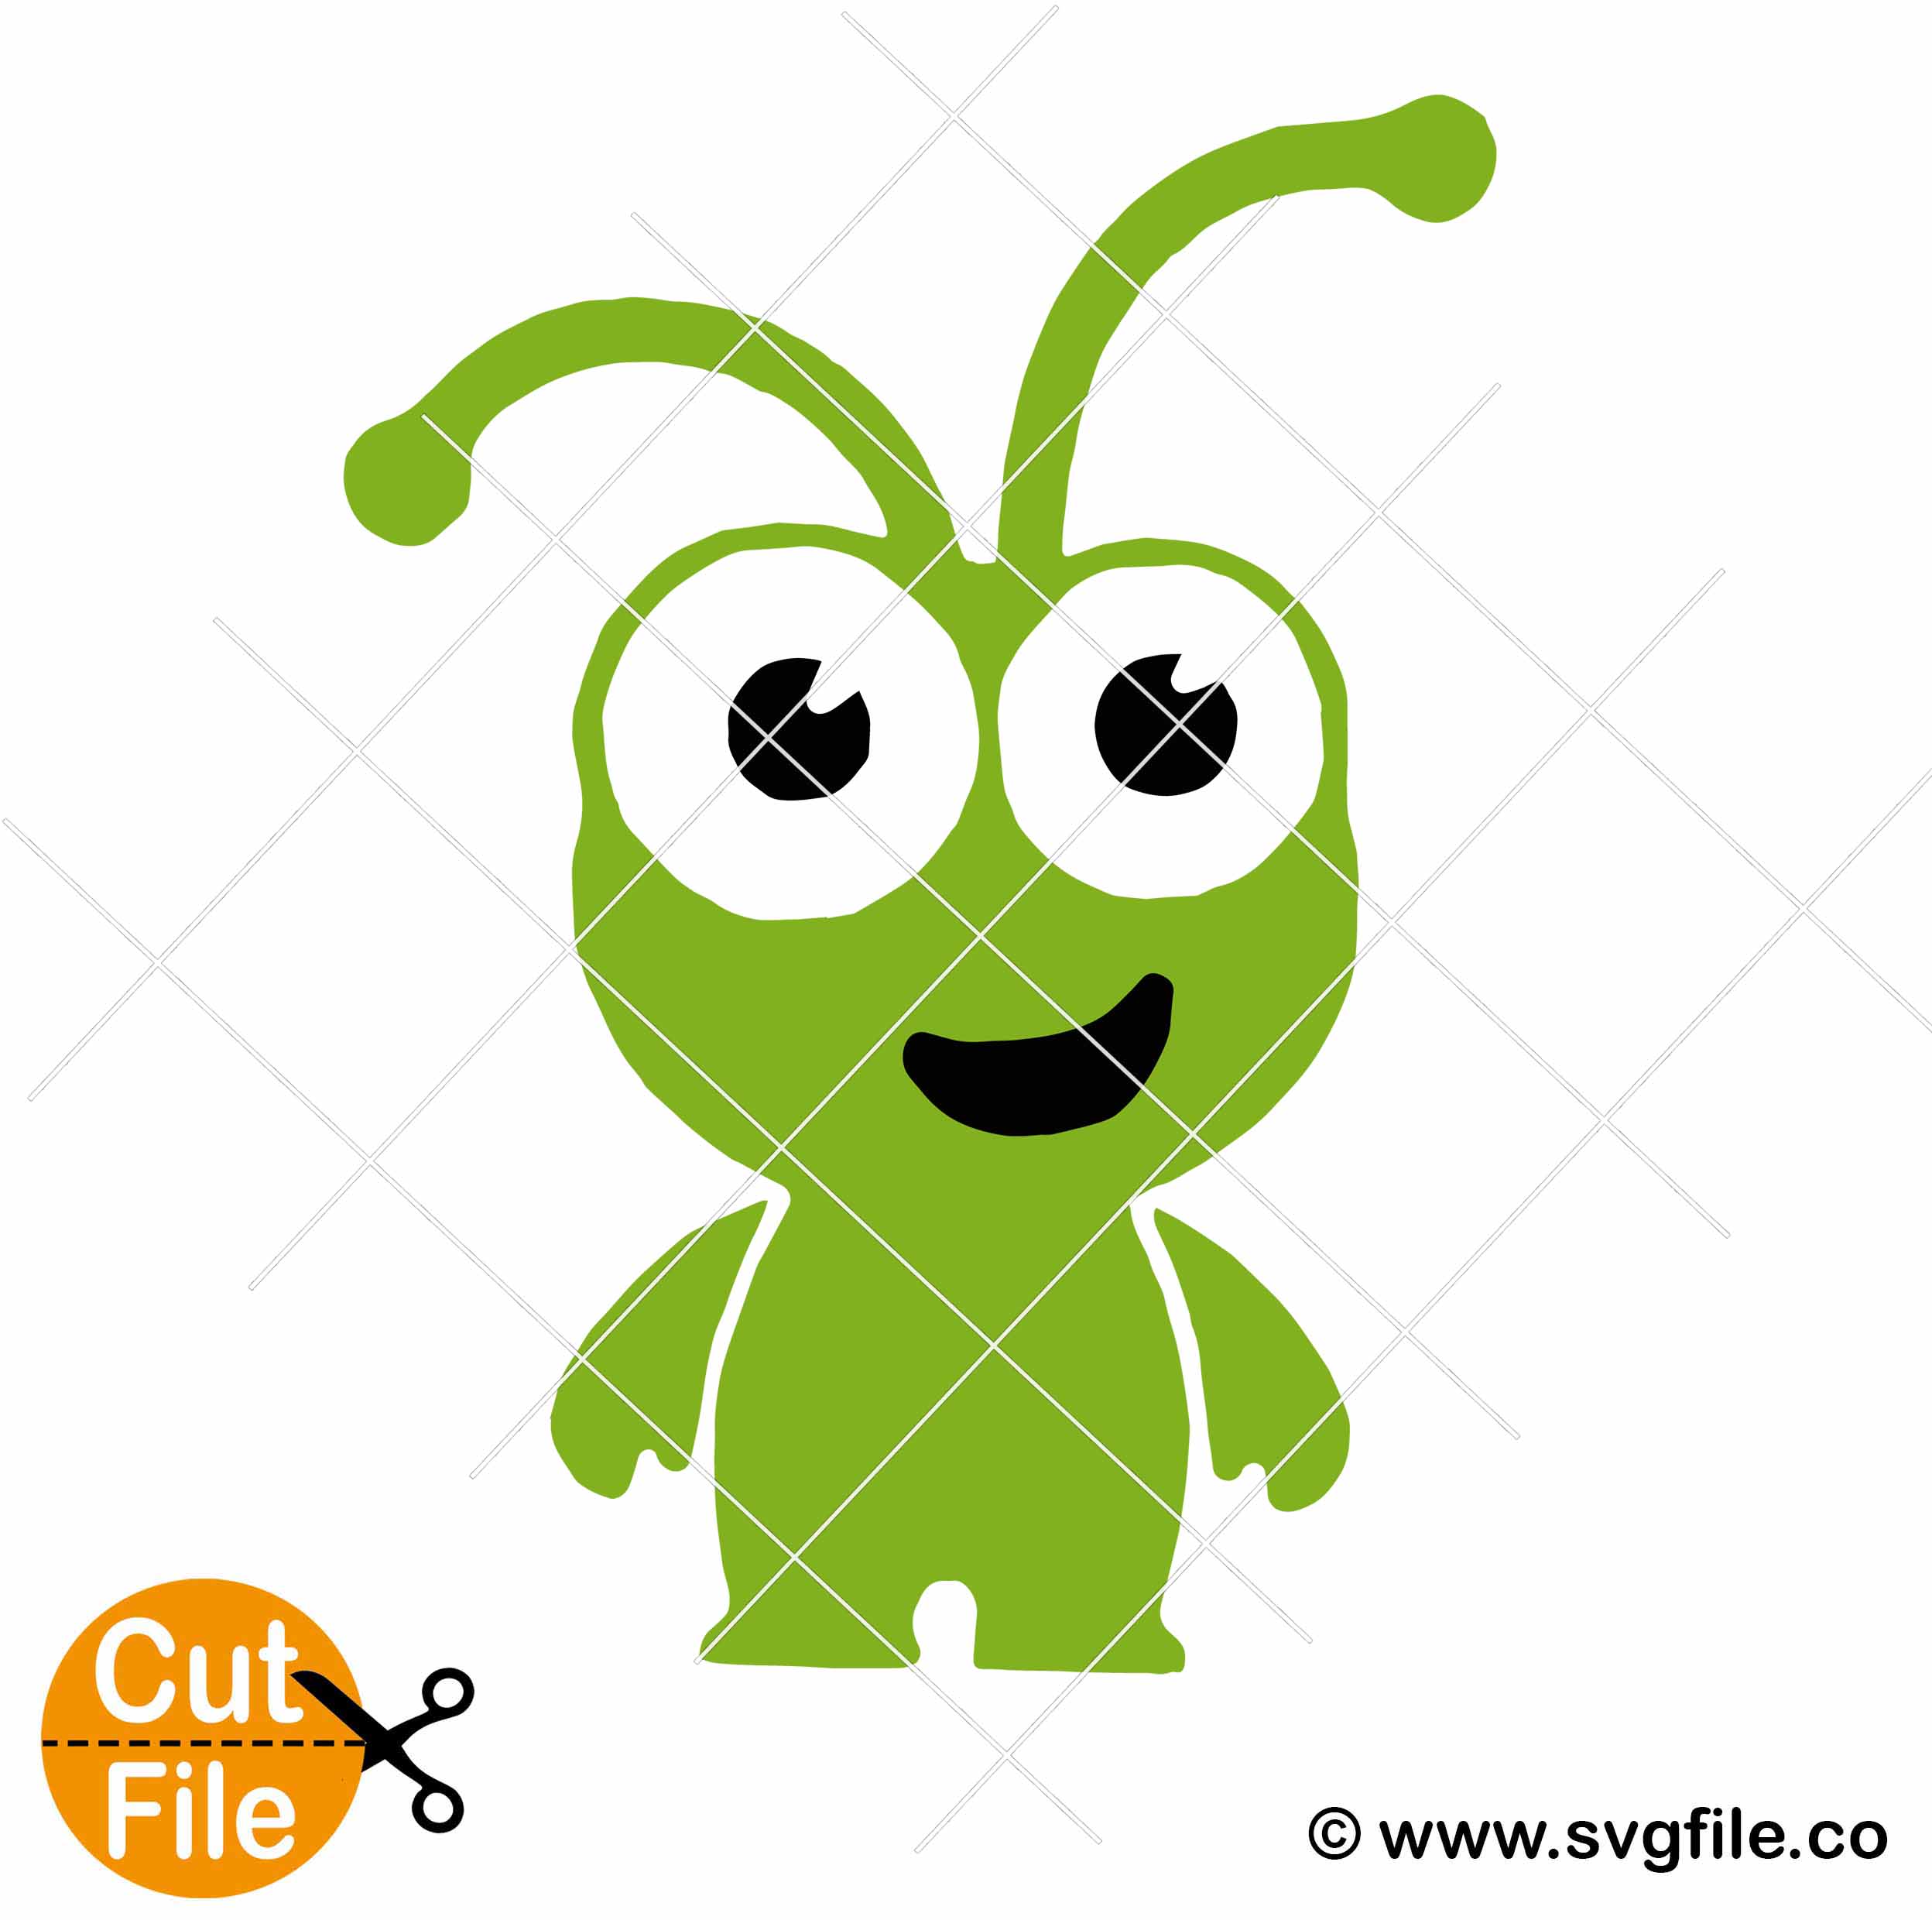 Download Cricut Cutie Svg Svgfile Co 0 99 Cent Svg Files Life Time Access SVG, PNG, EPS, DXF File